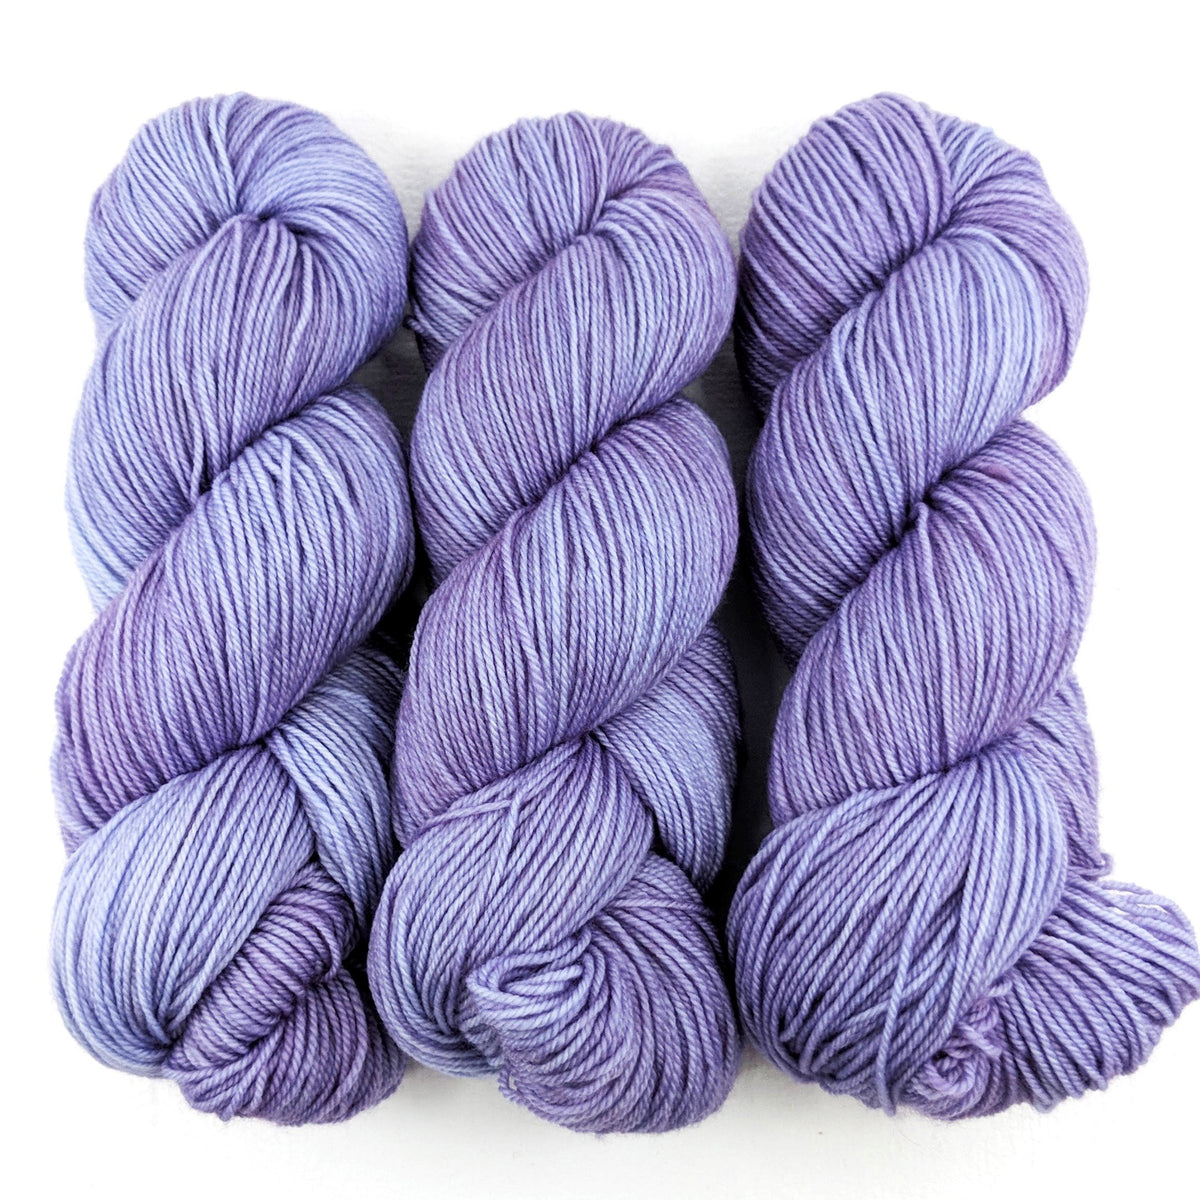 English Lavender - Revival Fingering - Dyed Stock